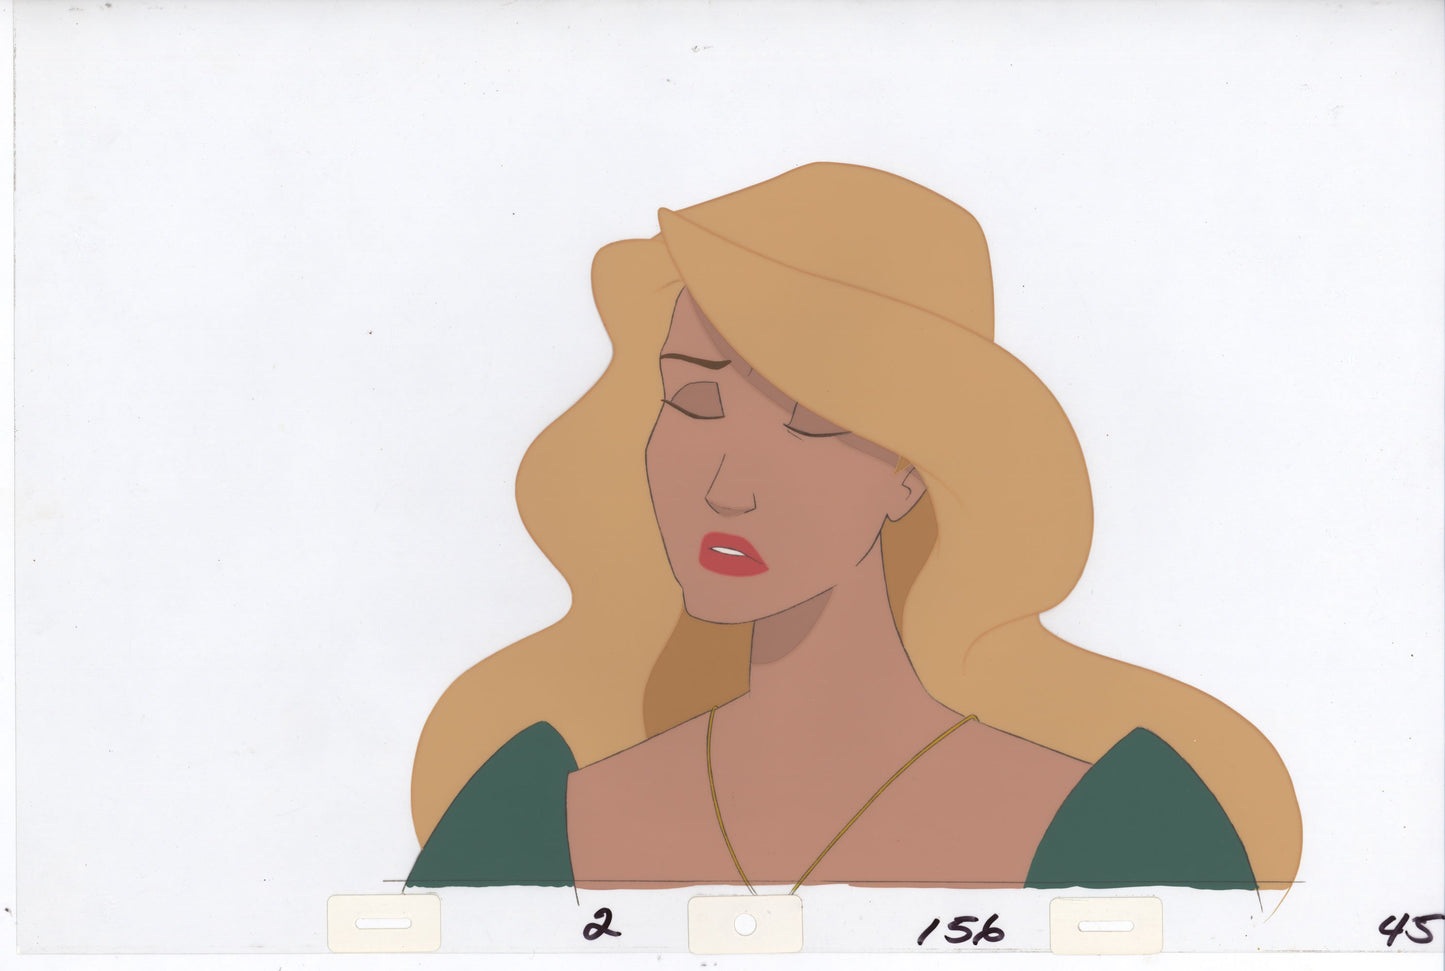 Swan Princess Celluloid Original Hand-Painted Animated Art Cel